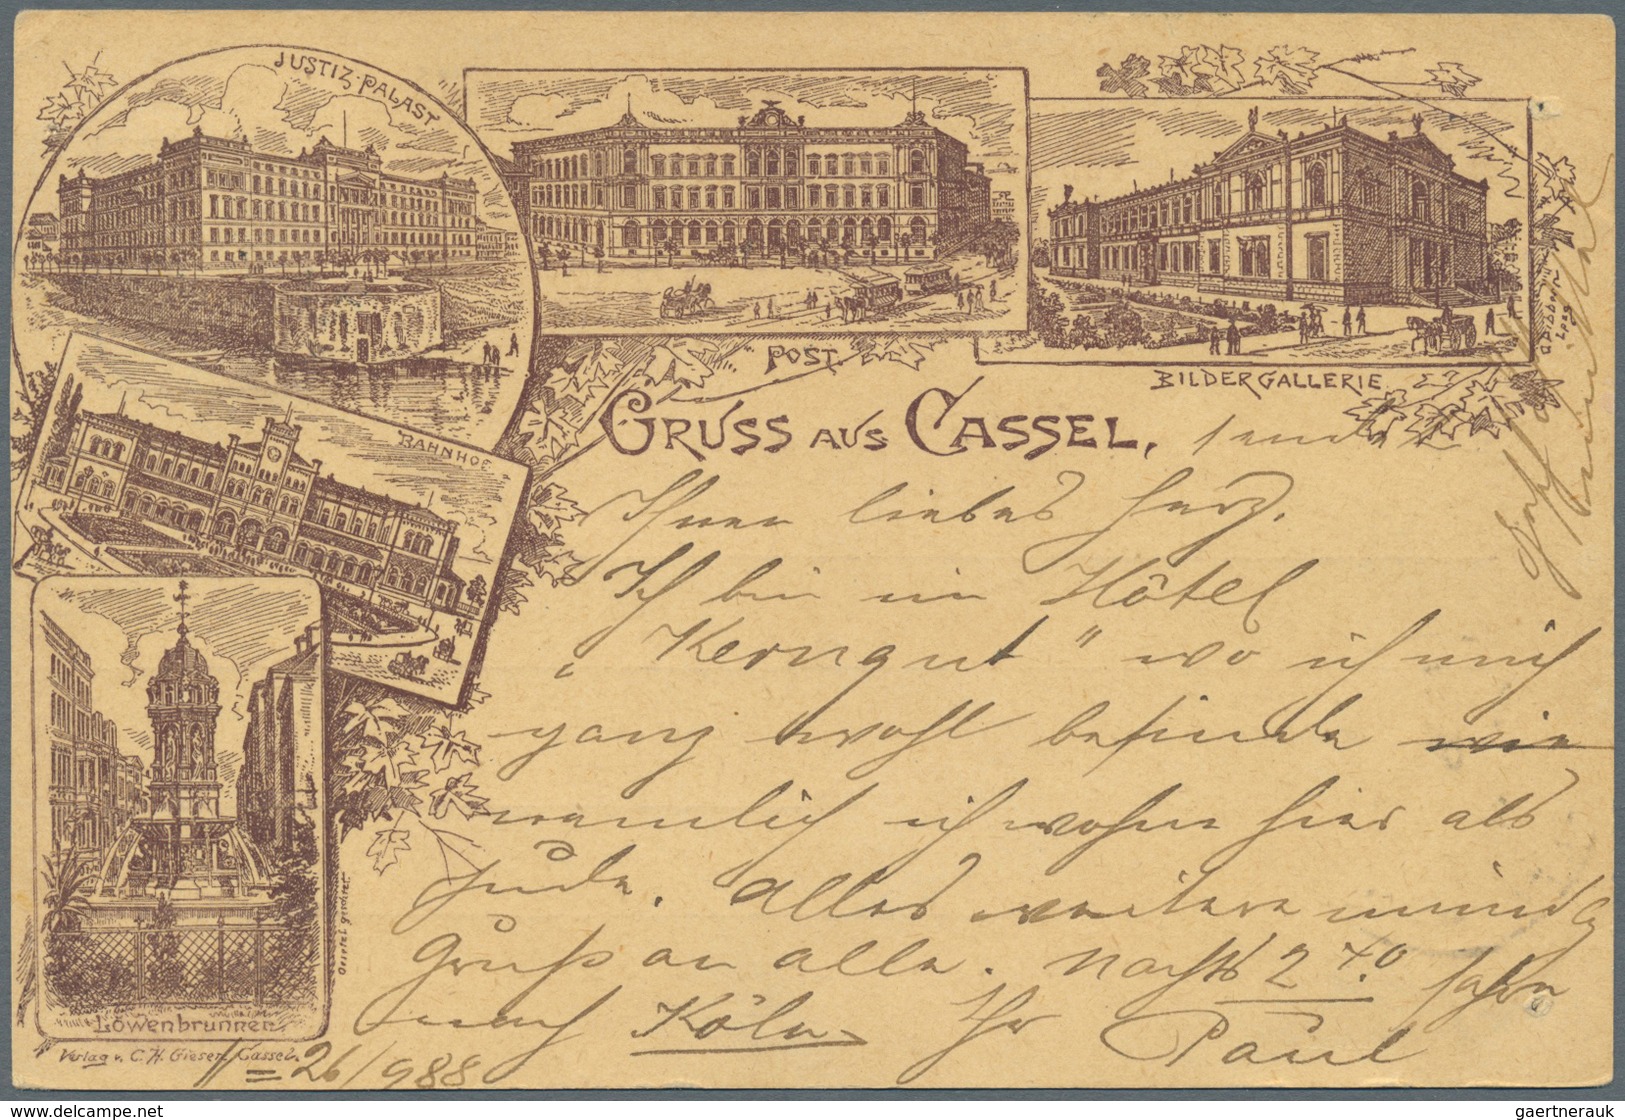 Ansichtskarten: Vorläufer: 1888, Cassel Mehrbildkarte Mit U.a. Bahnhof, Gestempelt K1 CASSEL 2 26.09 - Non Classificati